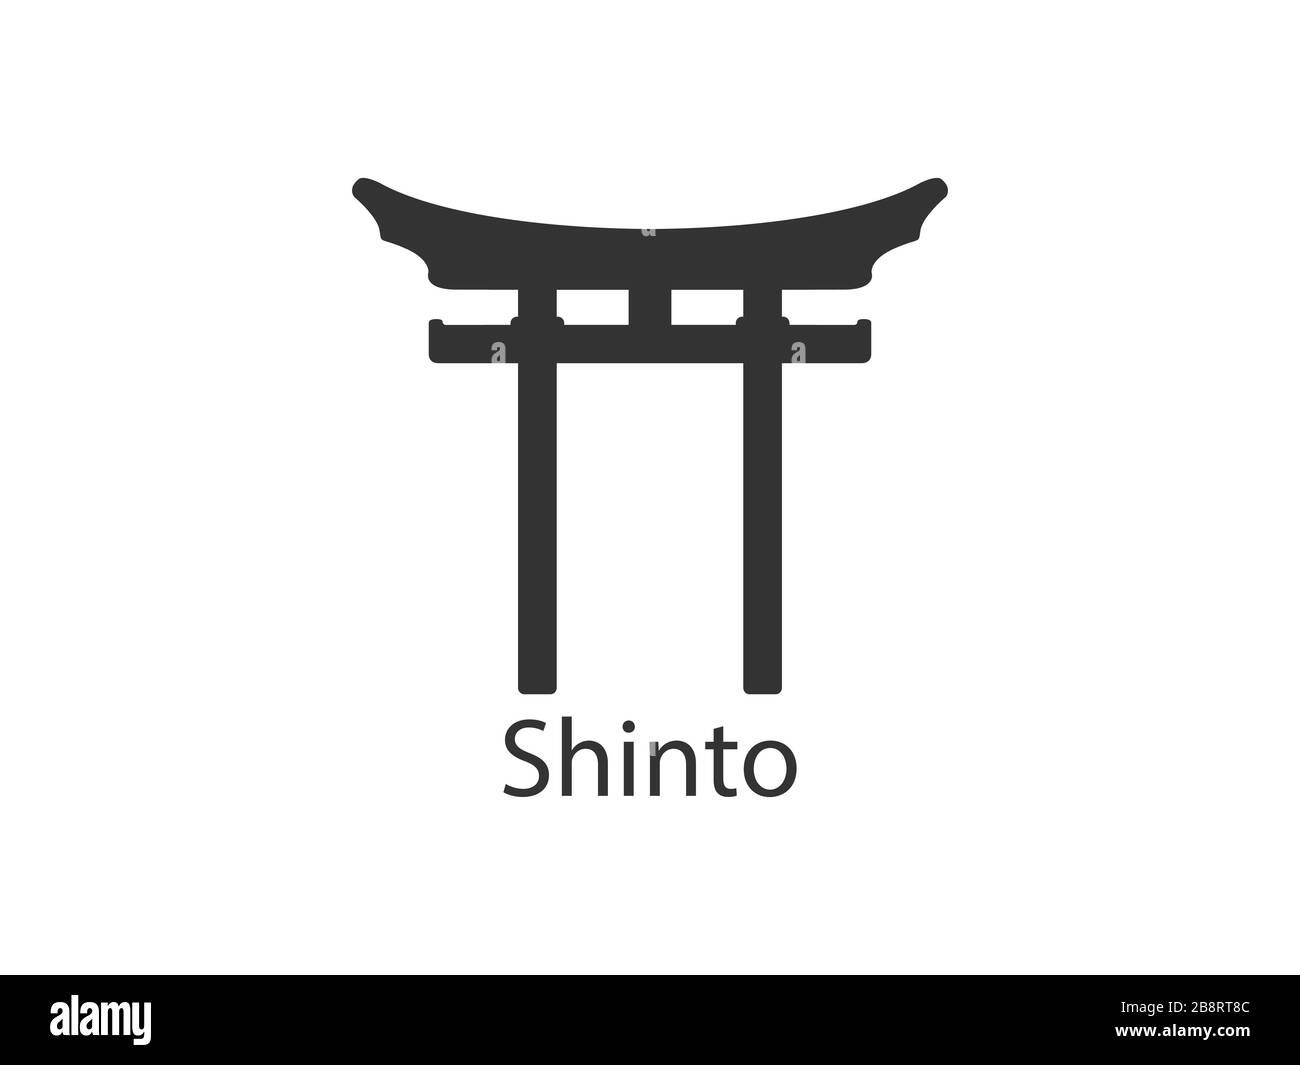 Japanisch, shinto, Torii-Ikone. Vektorgrafiken, flaches Design. Stock Vektor